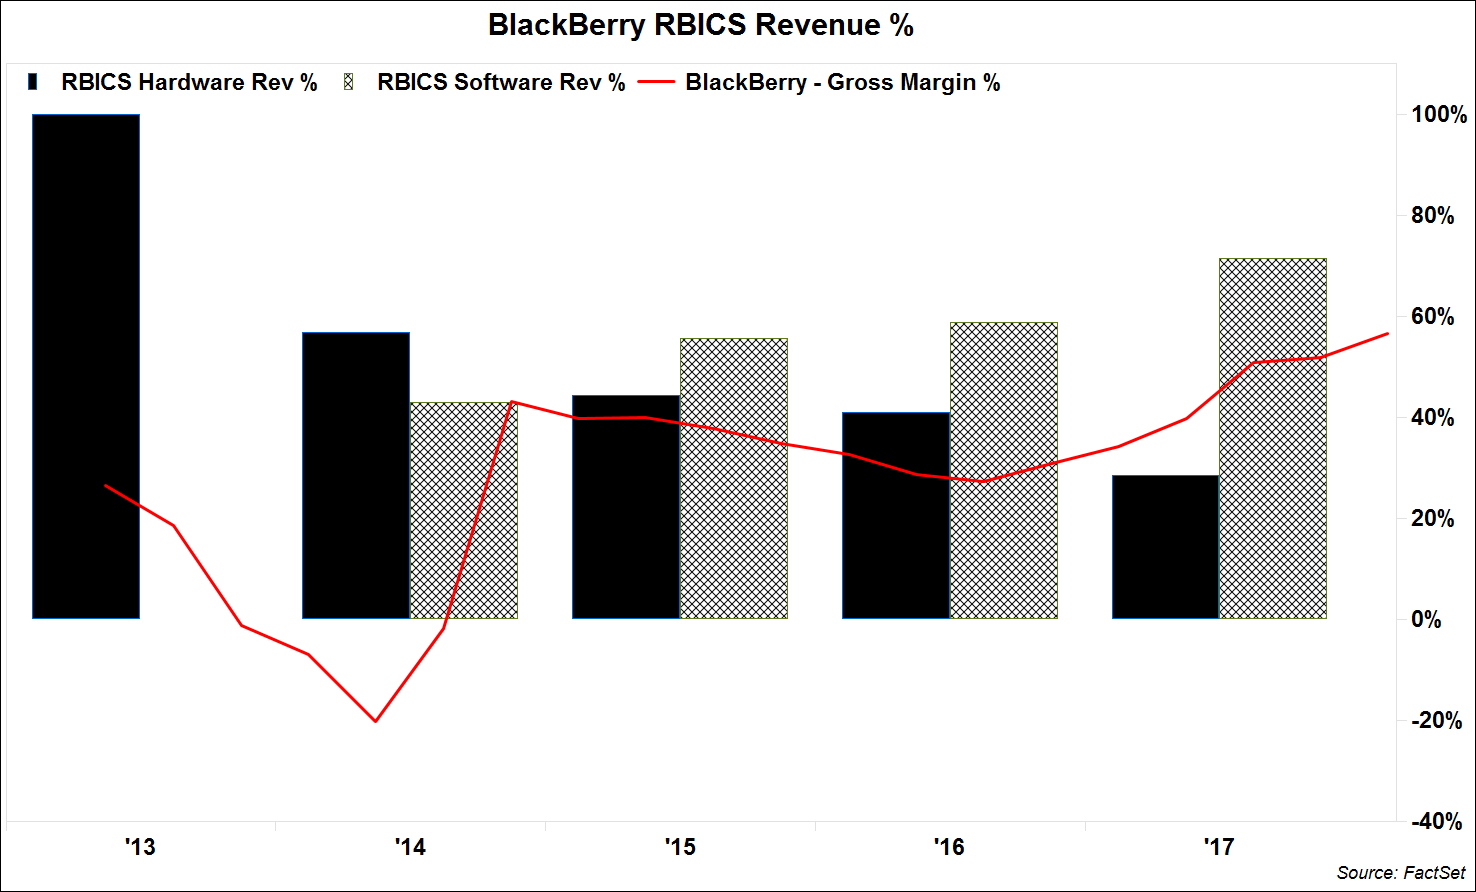 BlackBerry RBICS Revenue